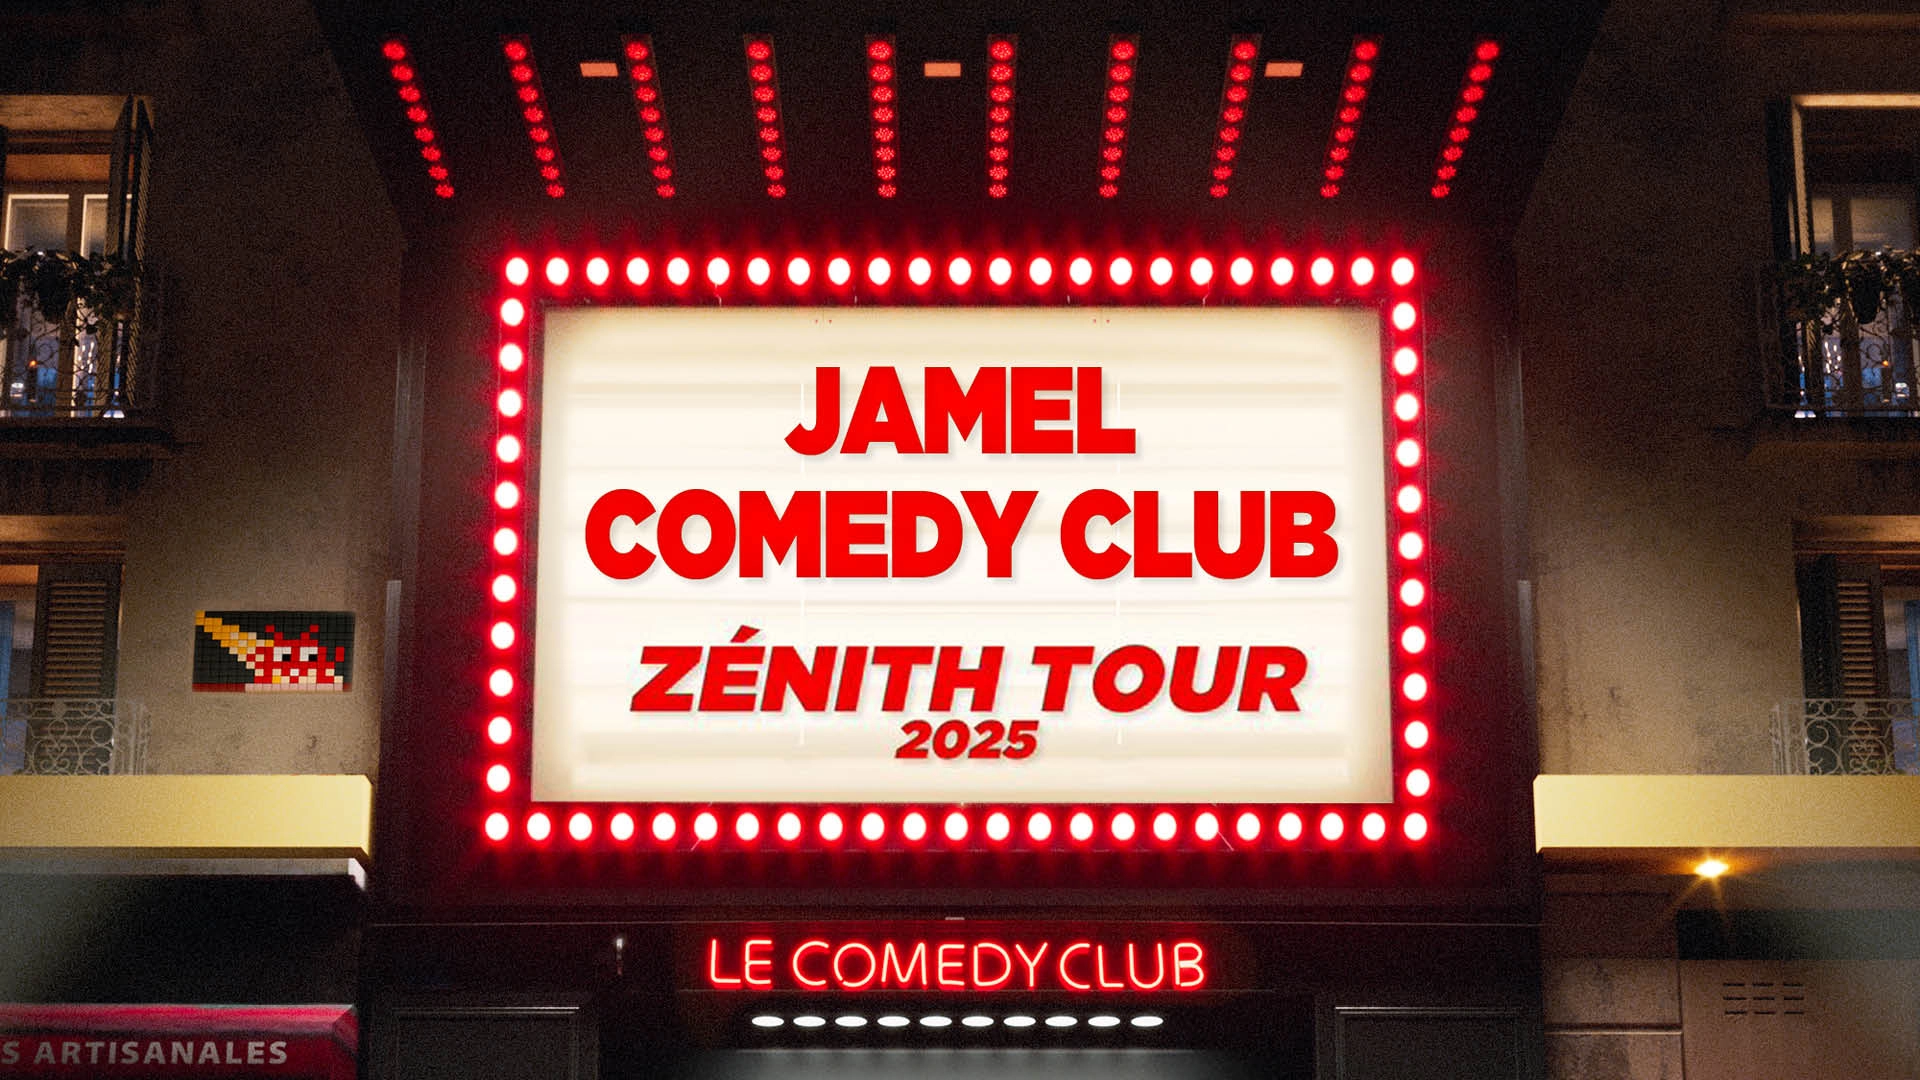 Jamel Comedy Club Zenith Tour 2025 at Zenith Pau Tickets